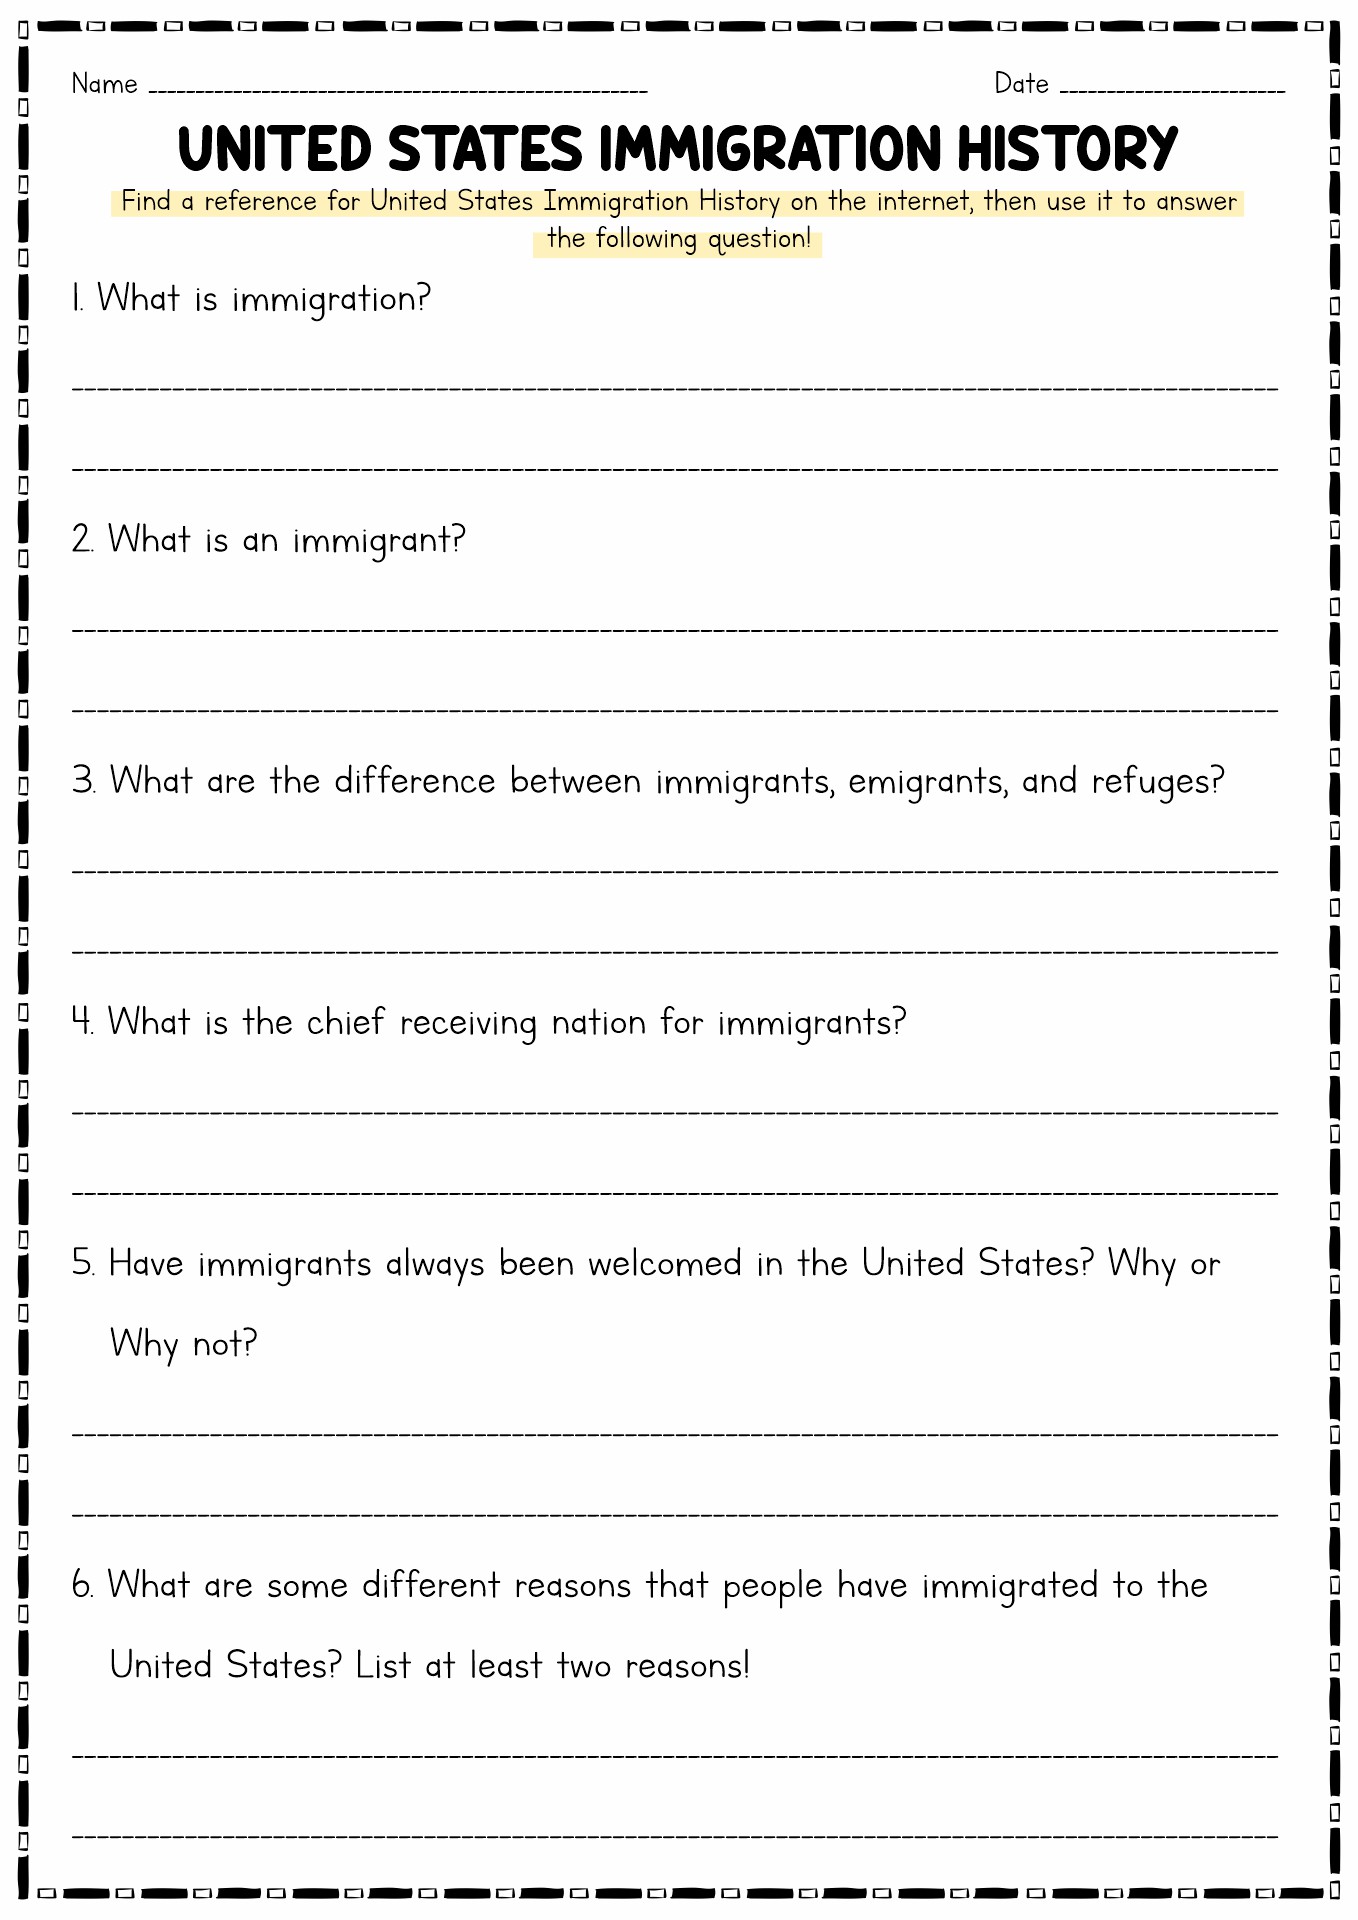 Student Worksheet Immigration History United States Image